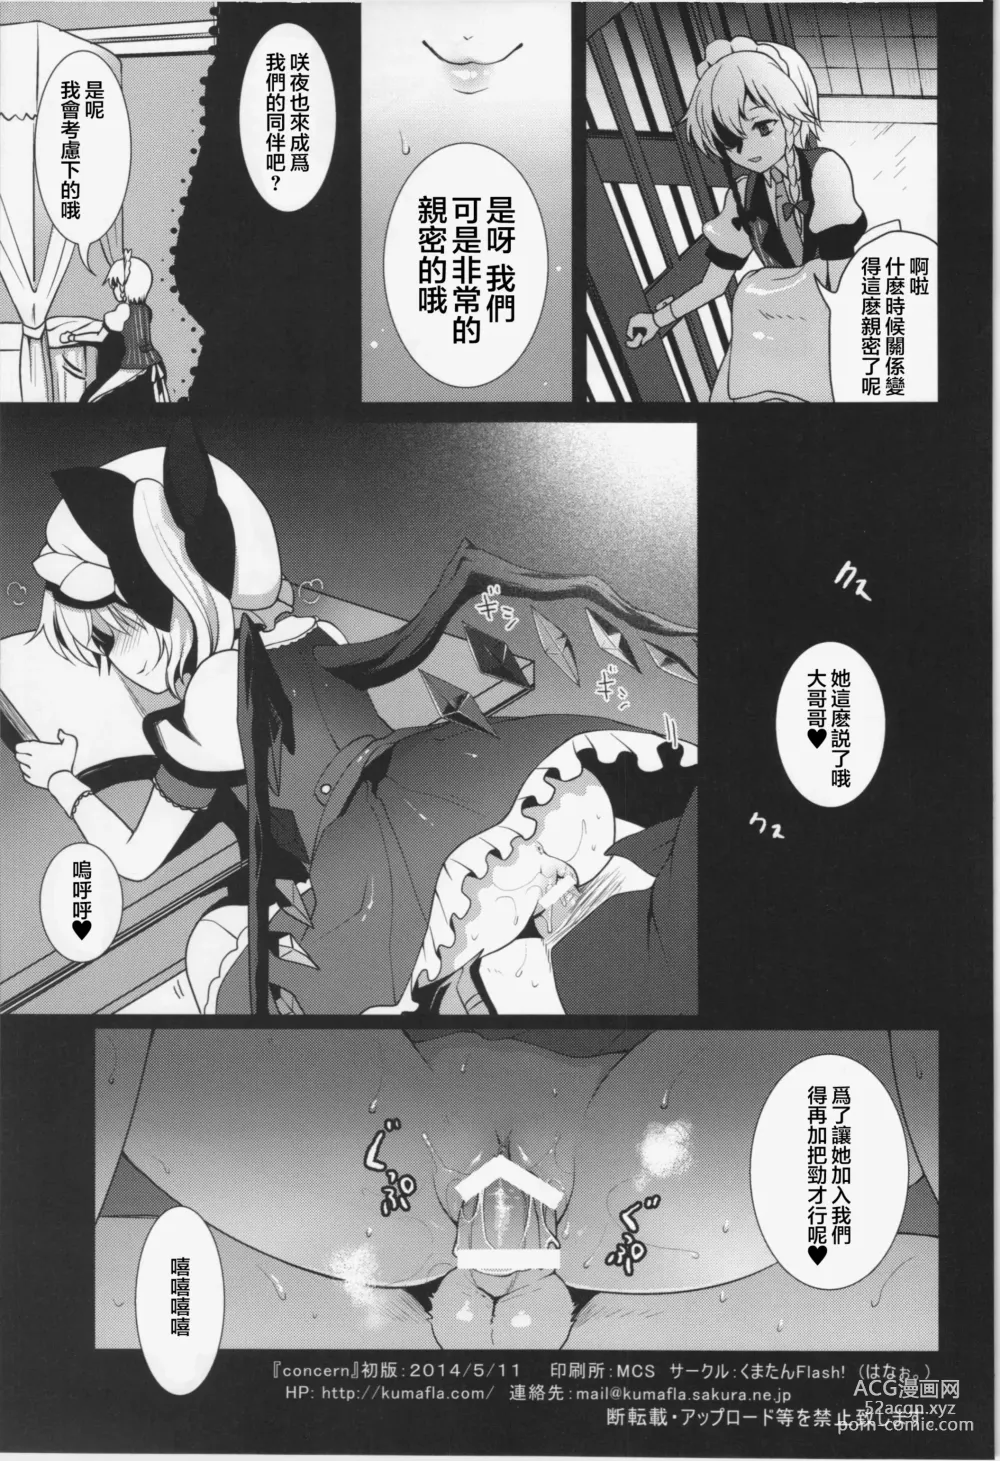 Page 25 of doujinshi concern